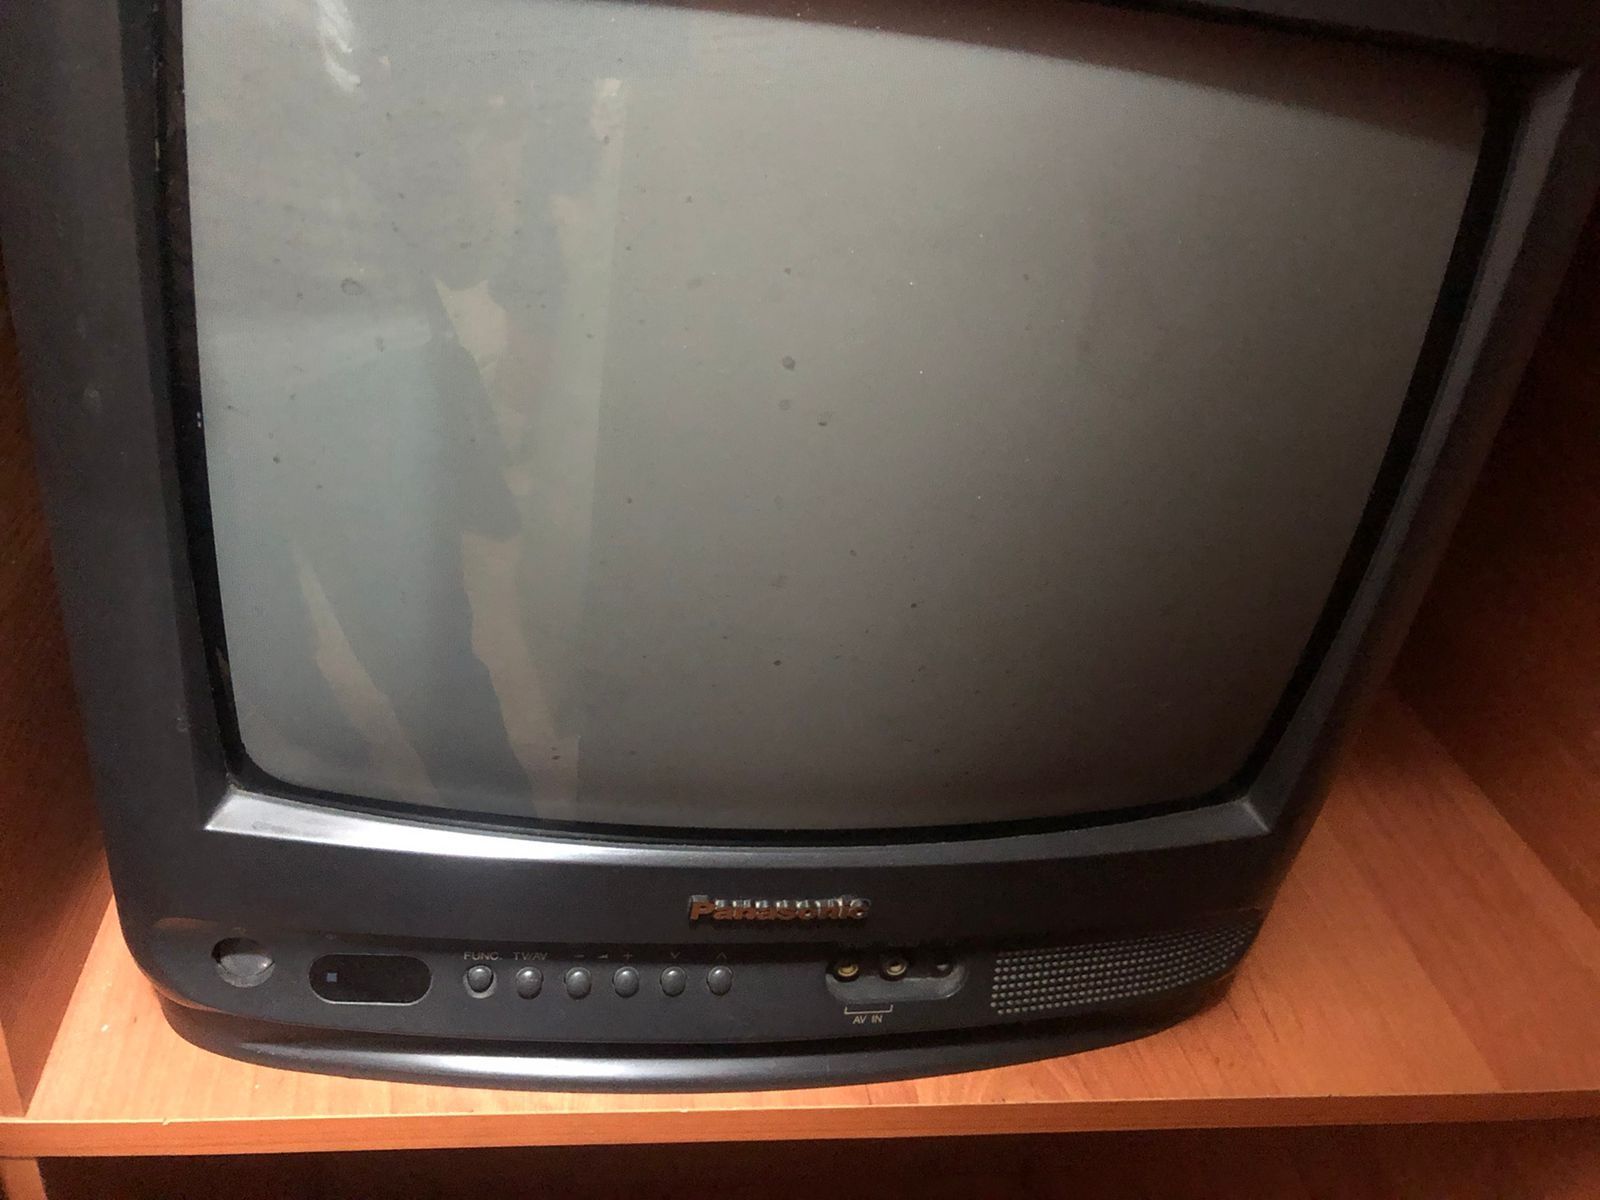 Телевизор панасоник